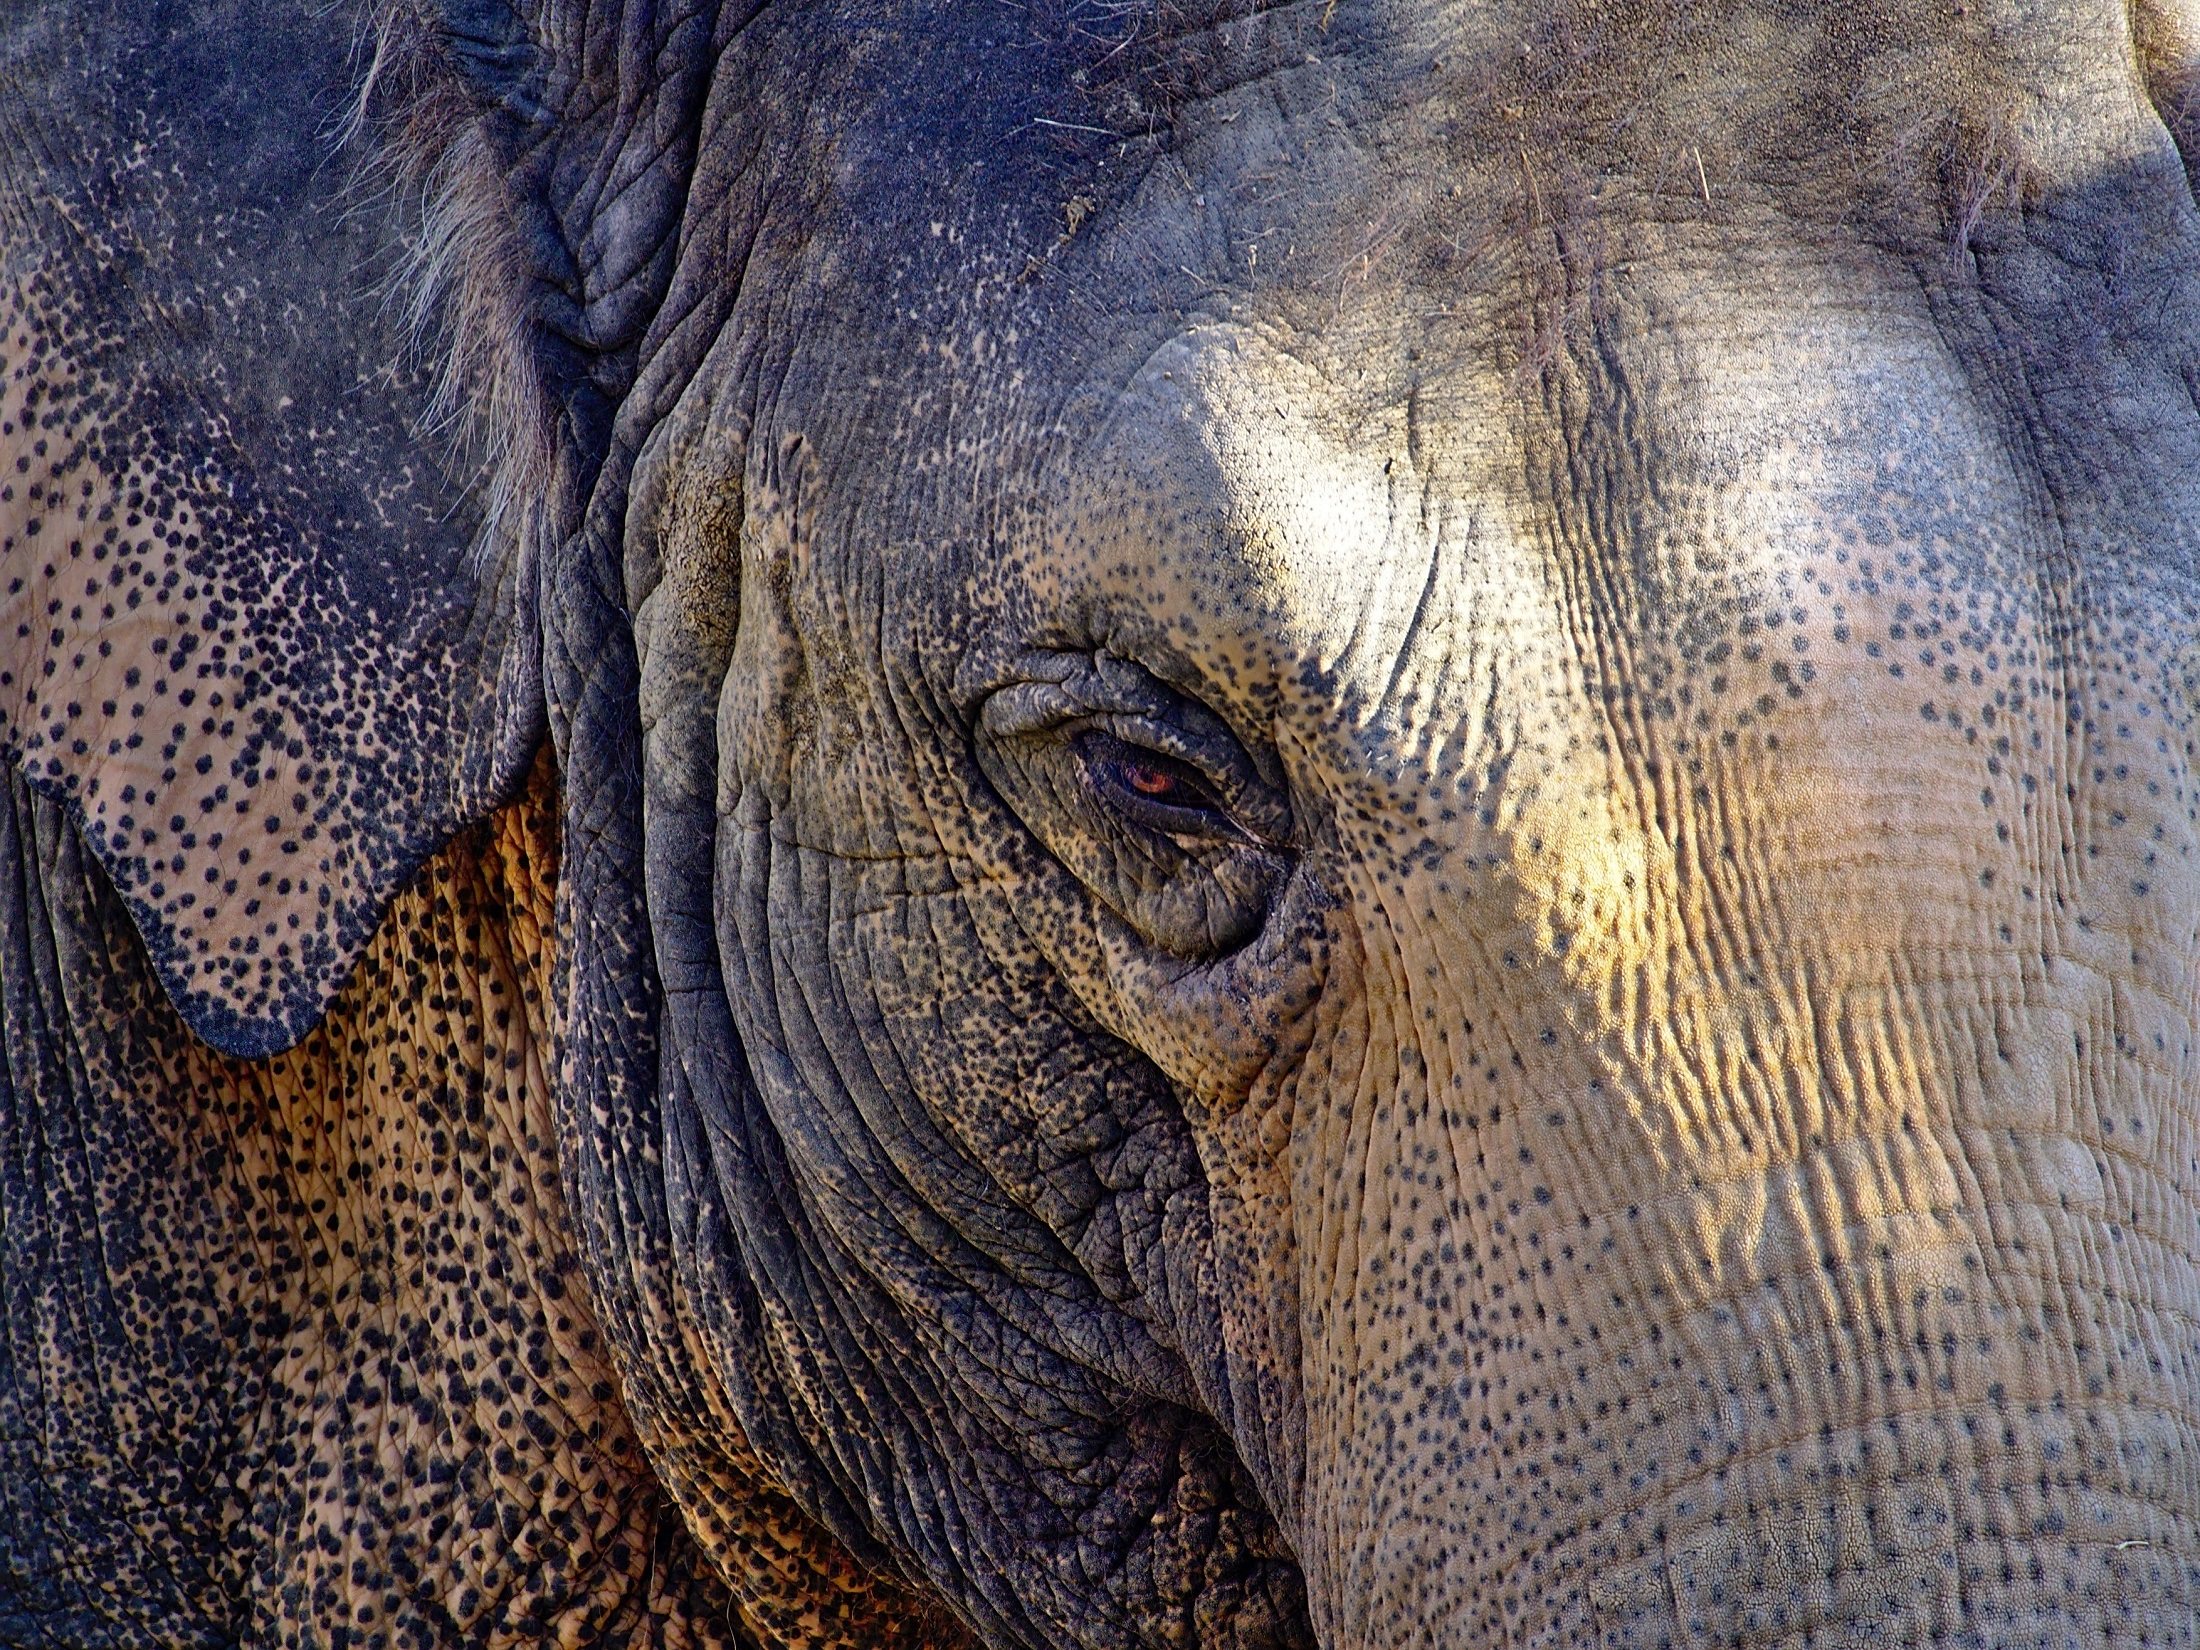 Elephant closeup photo